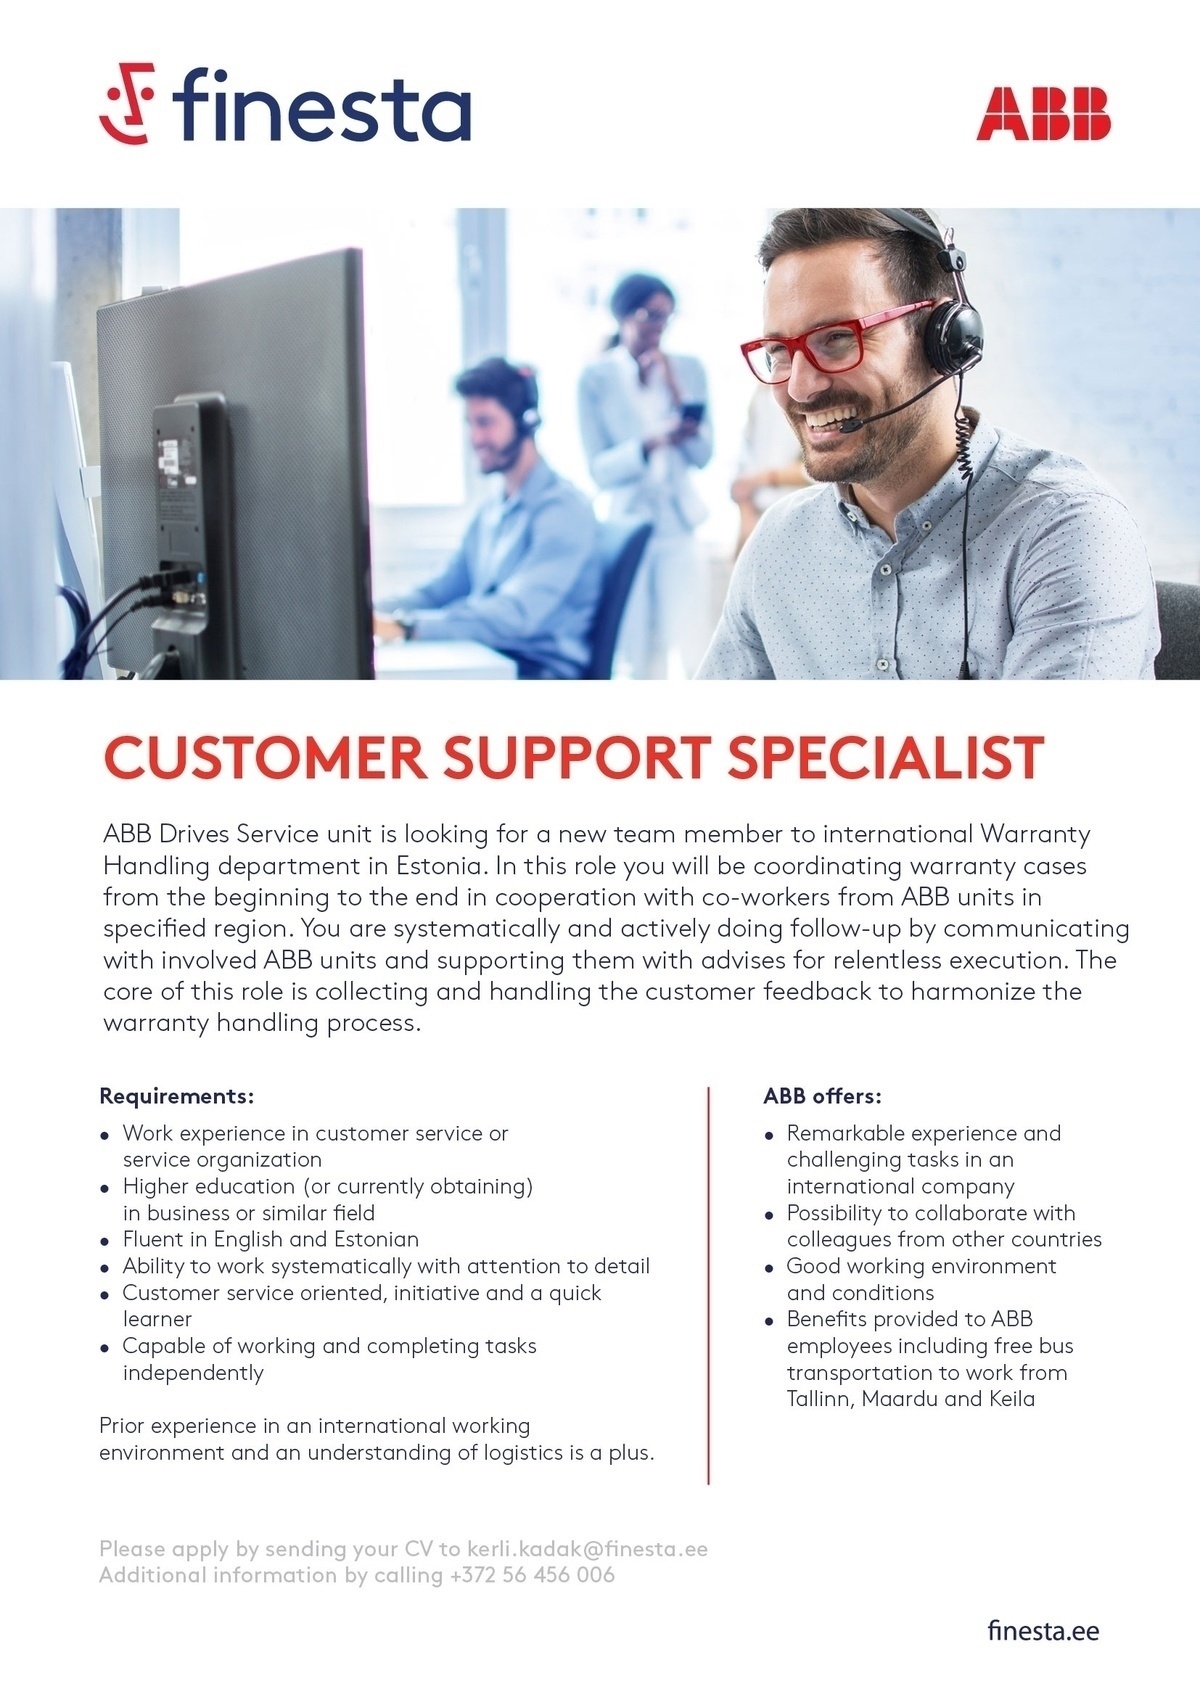 Finesta Baltic OÜ Customer Support Specialist